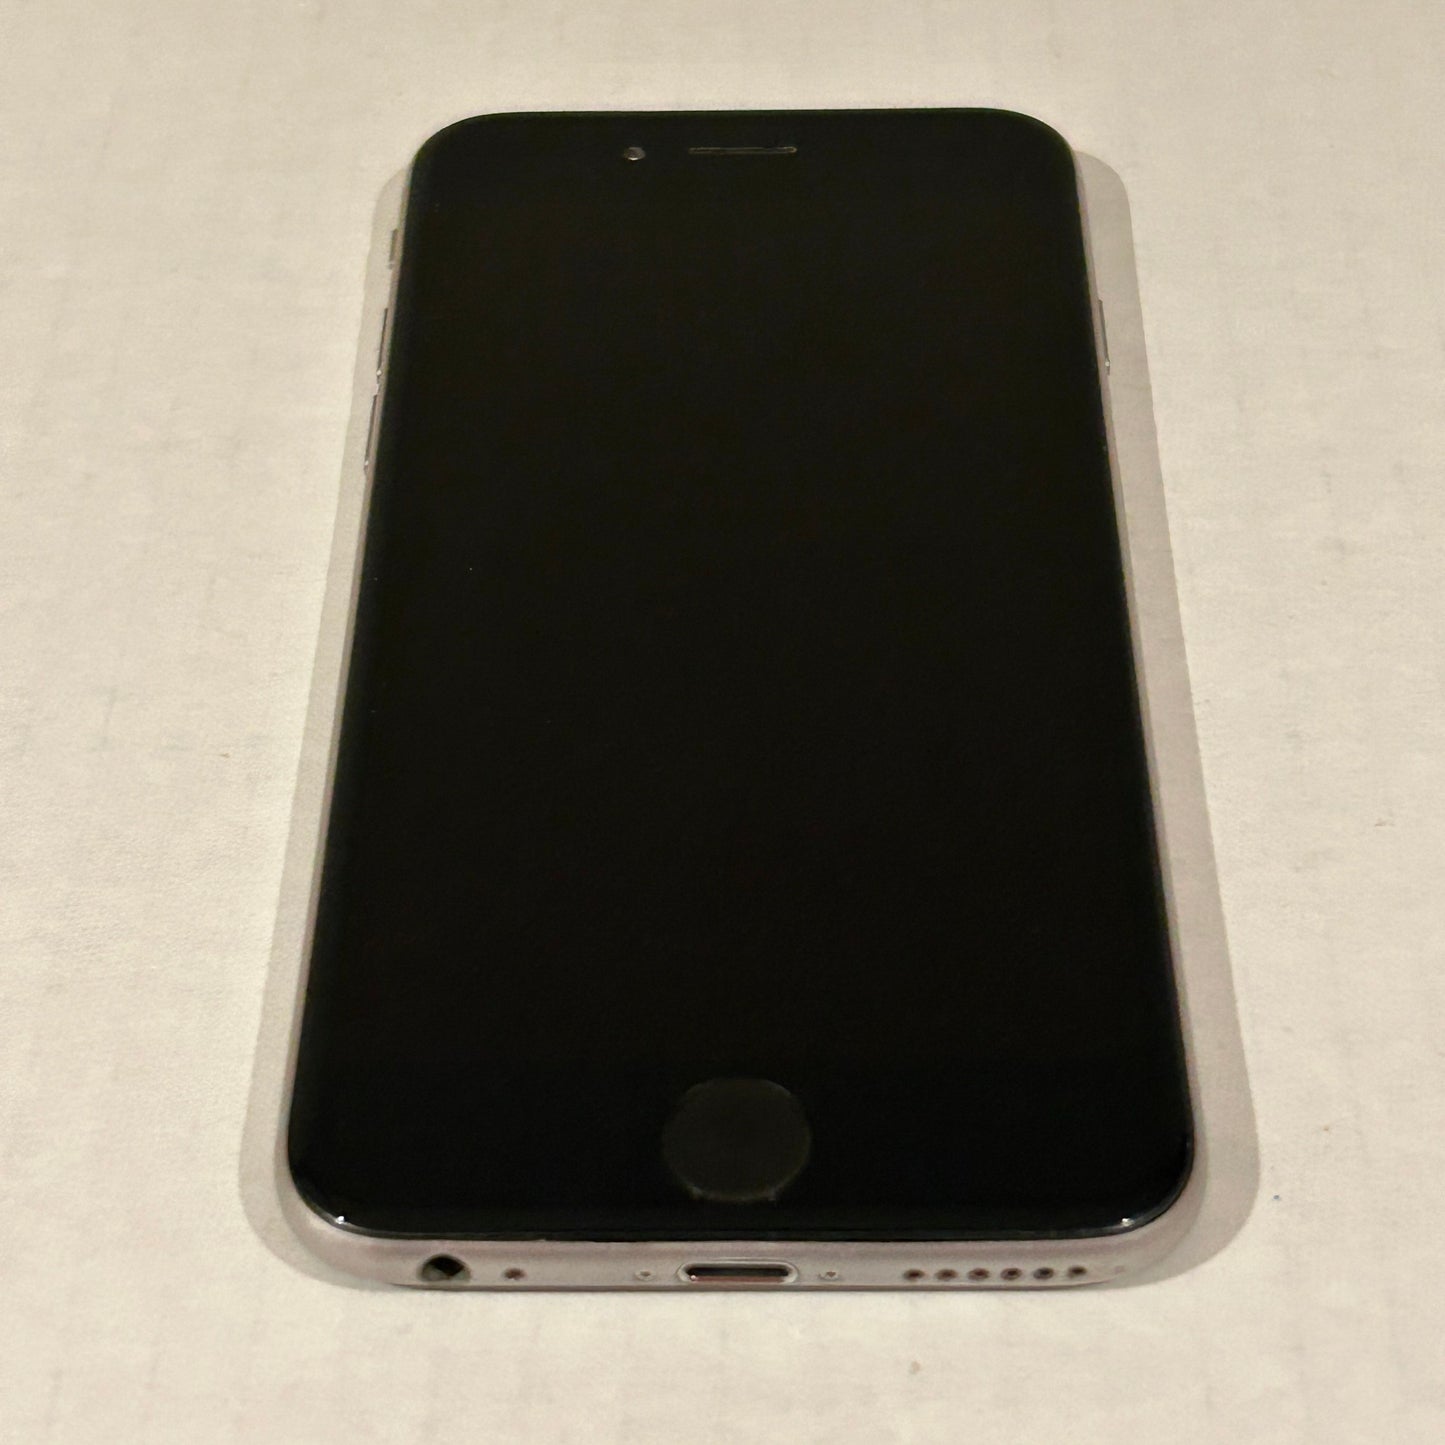 Silver 64 GB iPhone 6 Unlocked - A1549